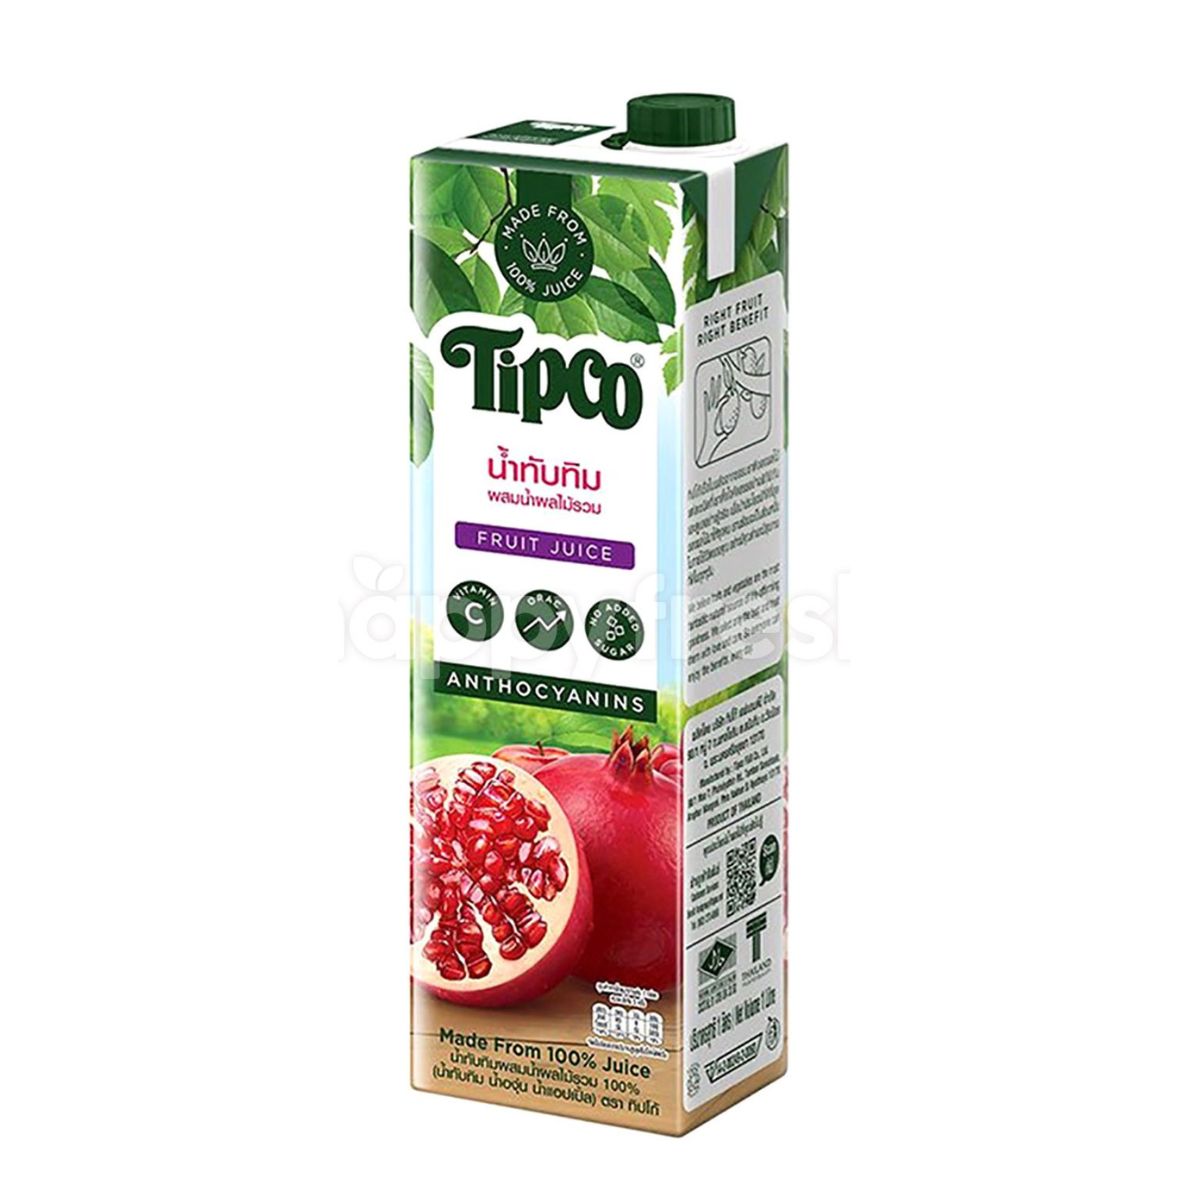 Tipco Pomegranate Mixed Fruit Juice - Anthocyanins - 1L